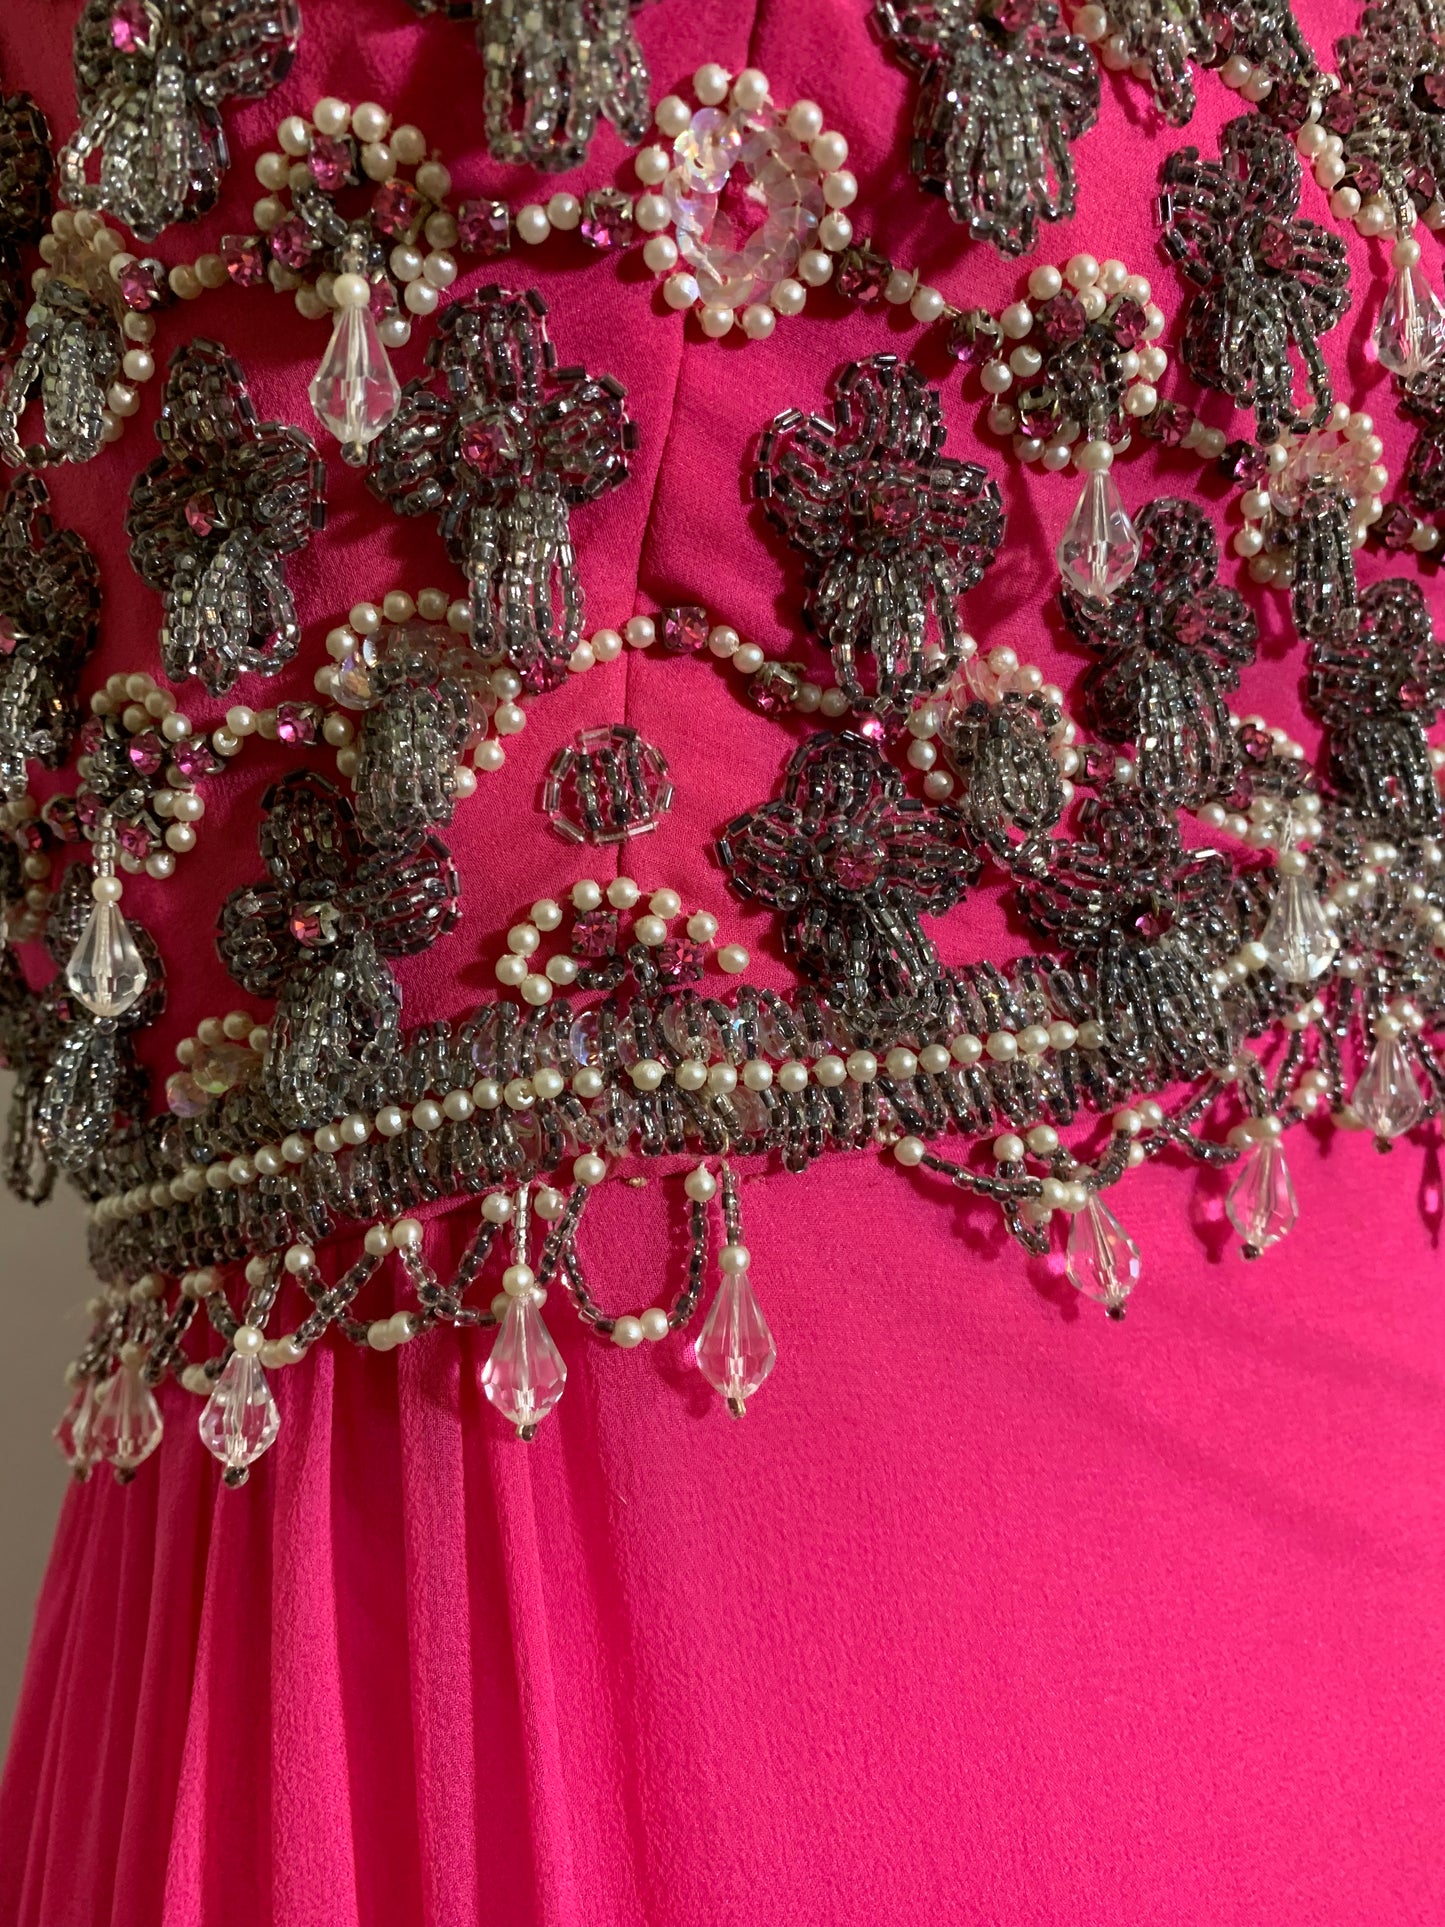 Shocking Pink Empire Waist Beaded Silk Chiffon Dress circa 1960s